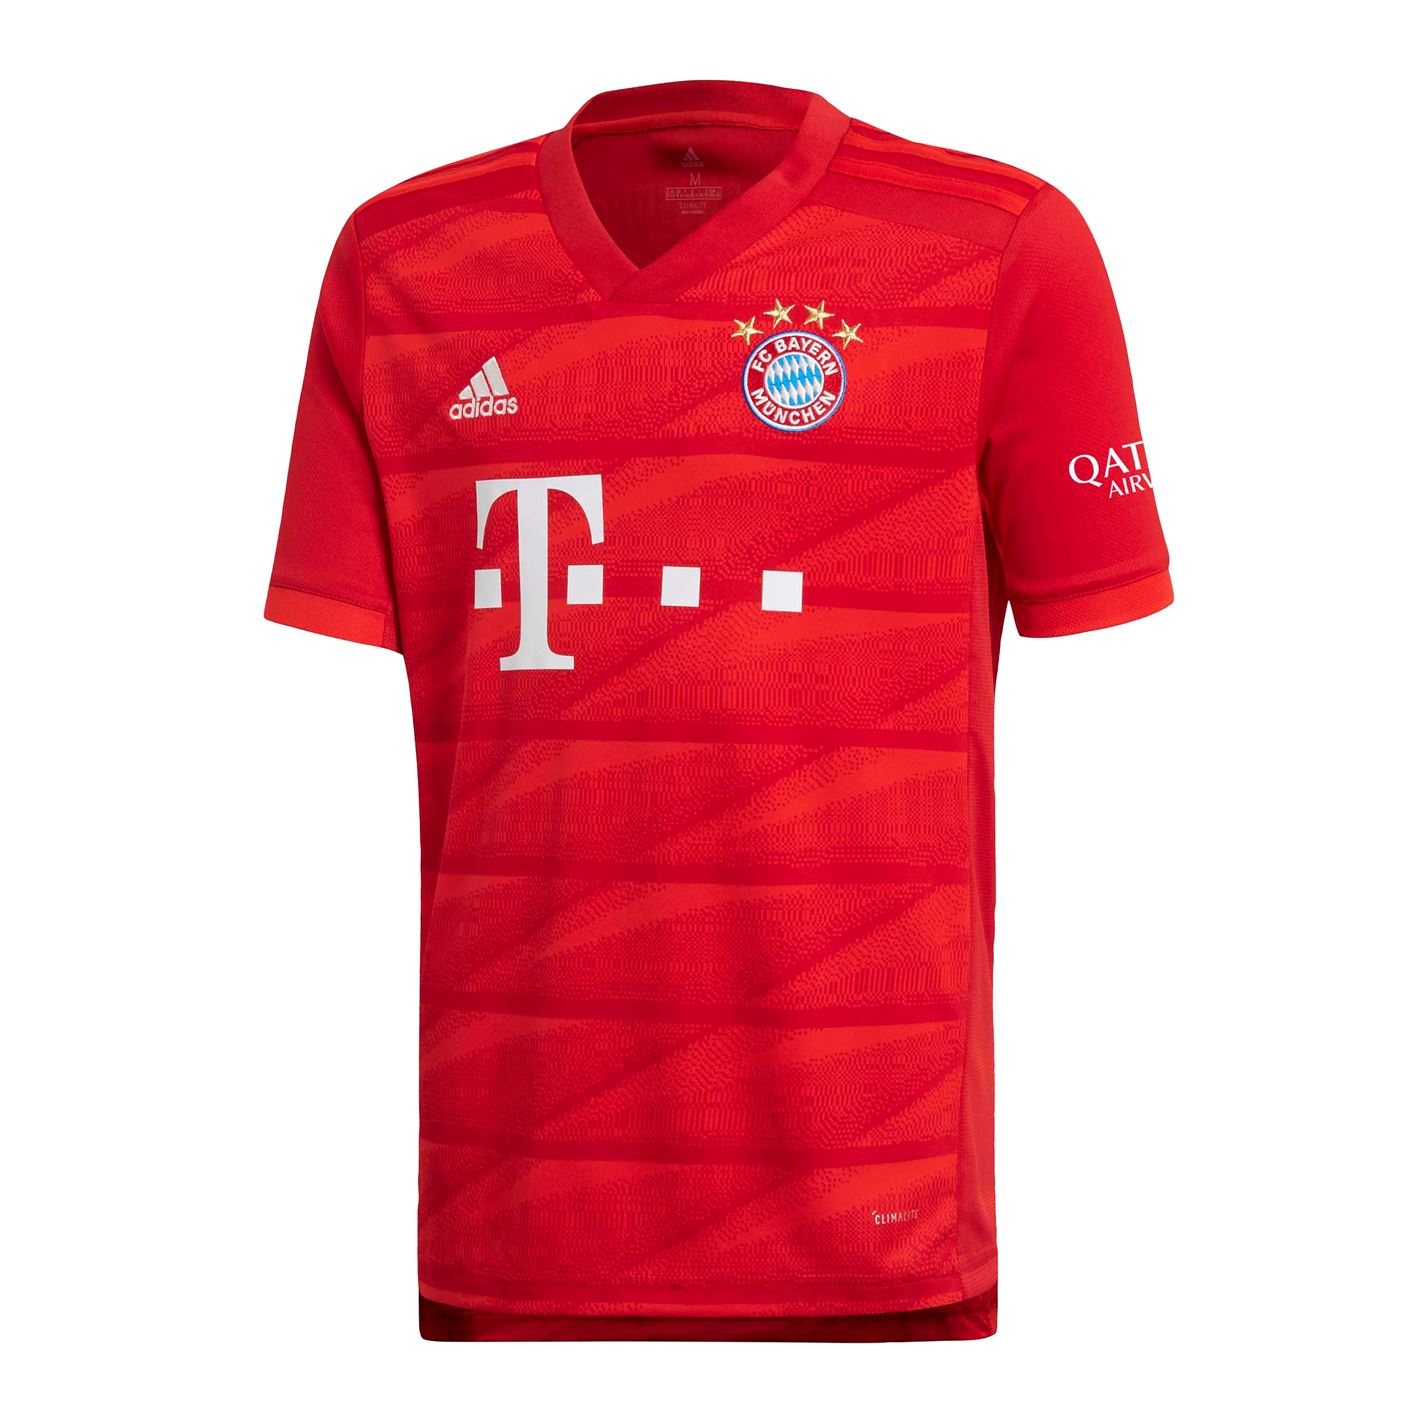 Tricou Acasa adidas Bayern Munich 2019 2020 pentru copii rosu